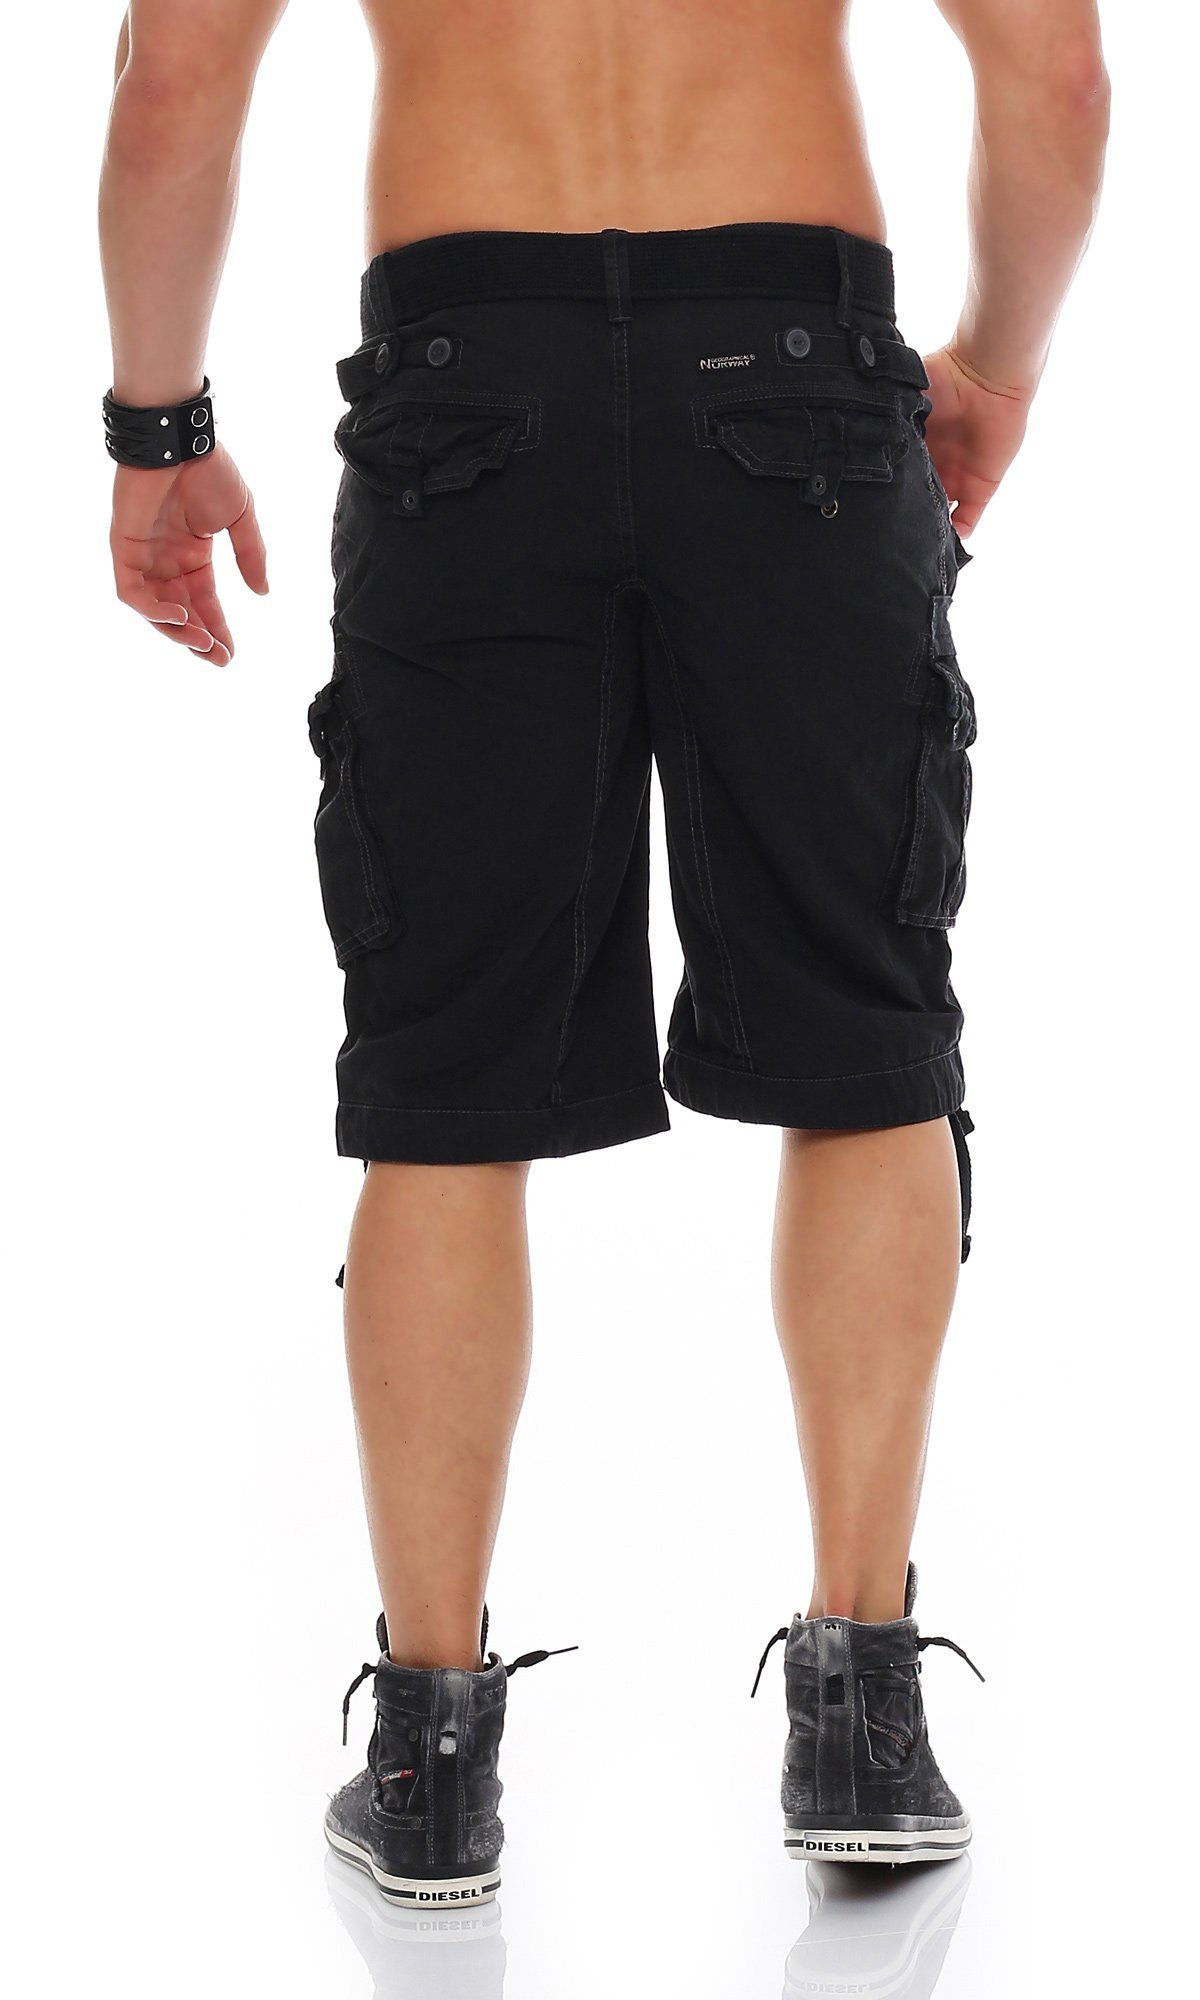 PANORAMIQUE Cargoshorts Schwarz Gürtel) Herren / (mit abnehmbarem camouflage Geographical Shorts, Norway Hose, Shorts kurze unifarben